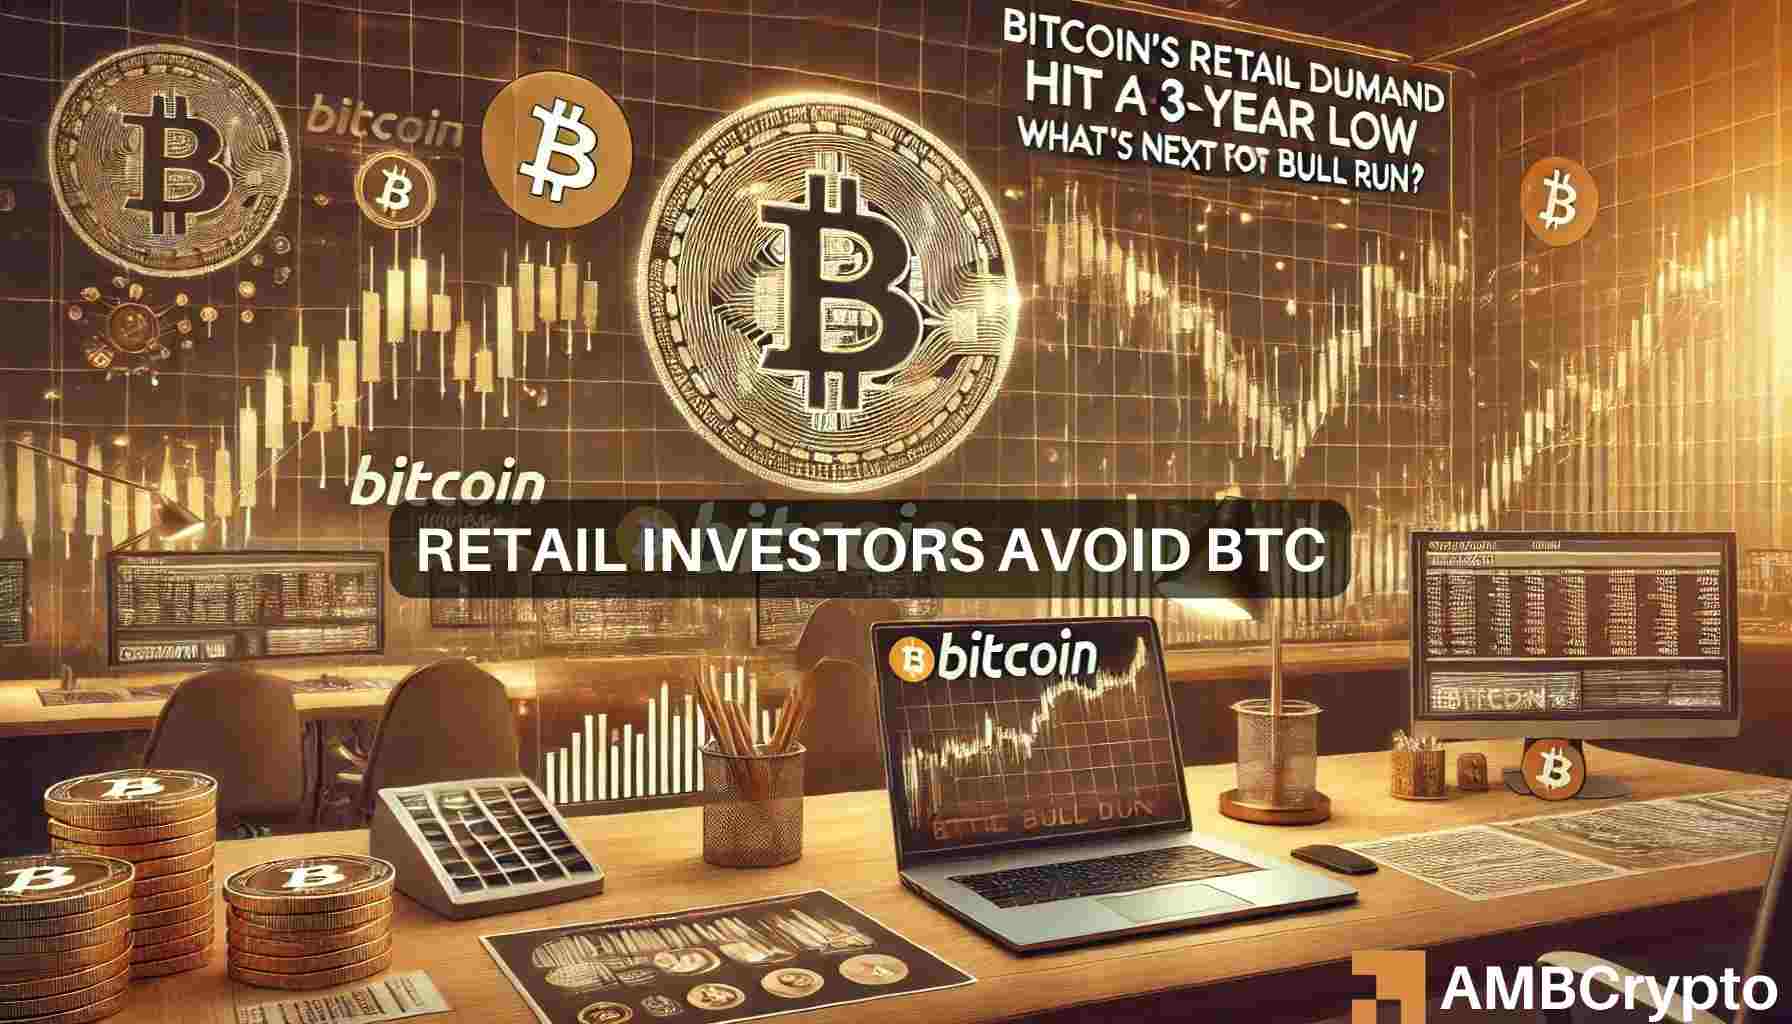 Bitcoin’s bull run continues, but where’s the retail demand?